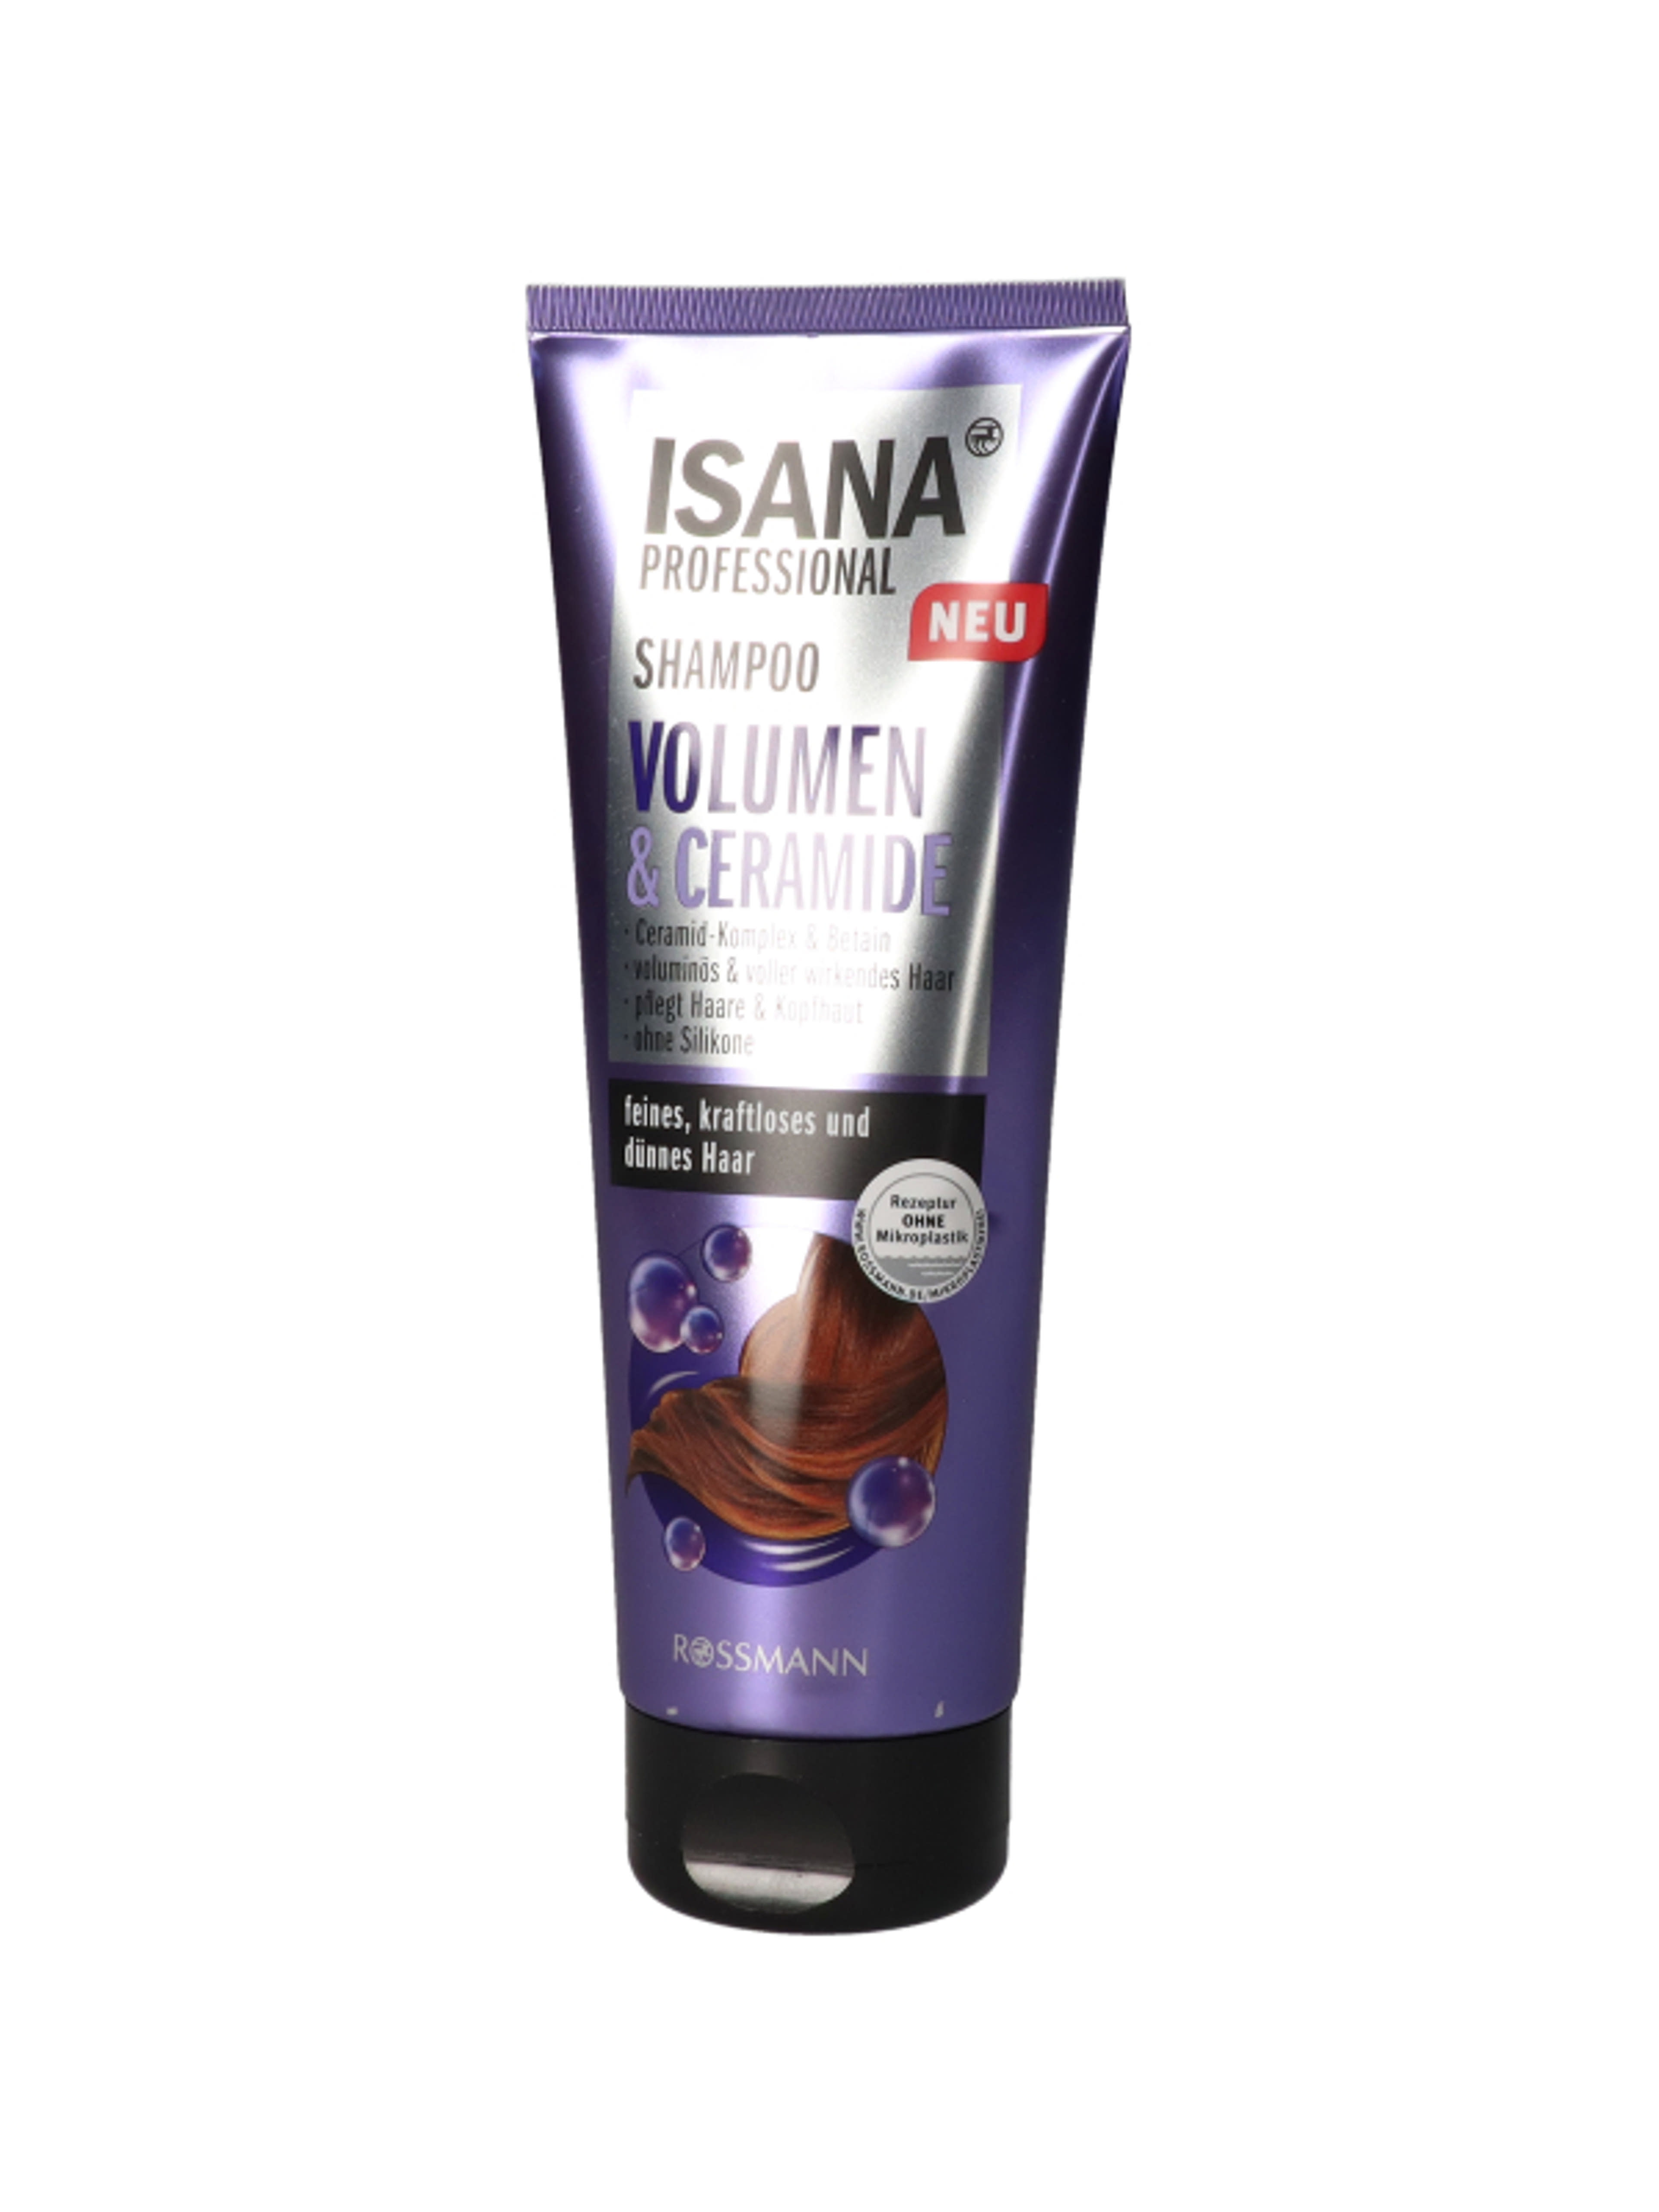 Isana Hair Professional Volume&Ceramide sampon - 250 ml-4